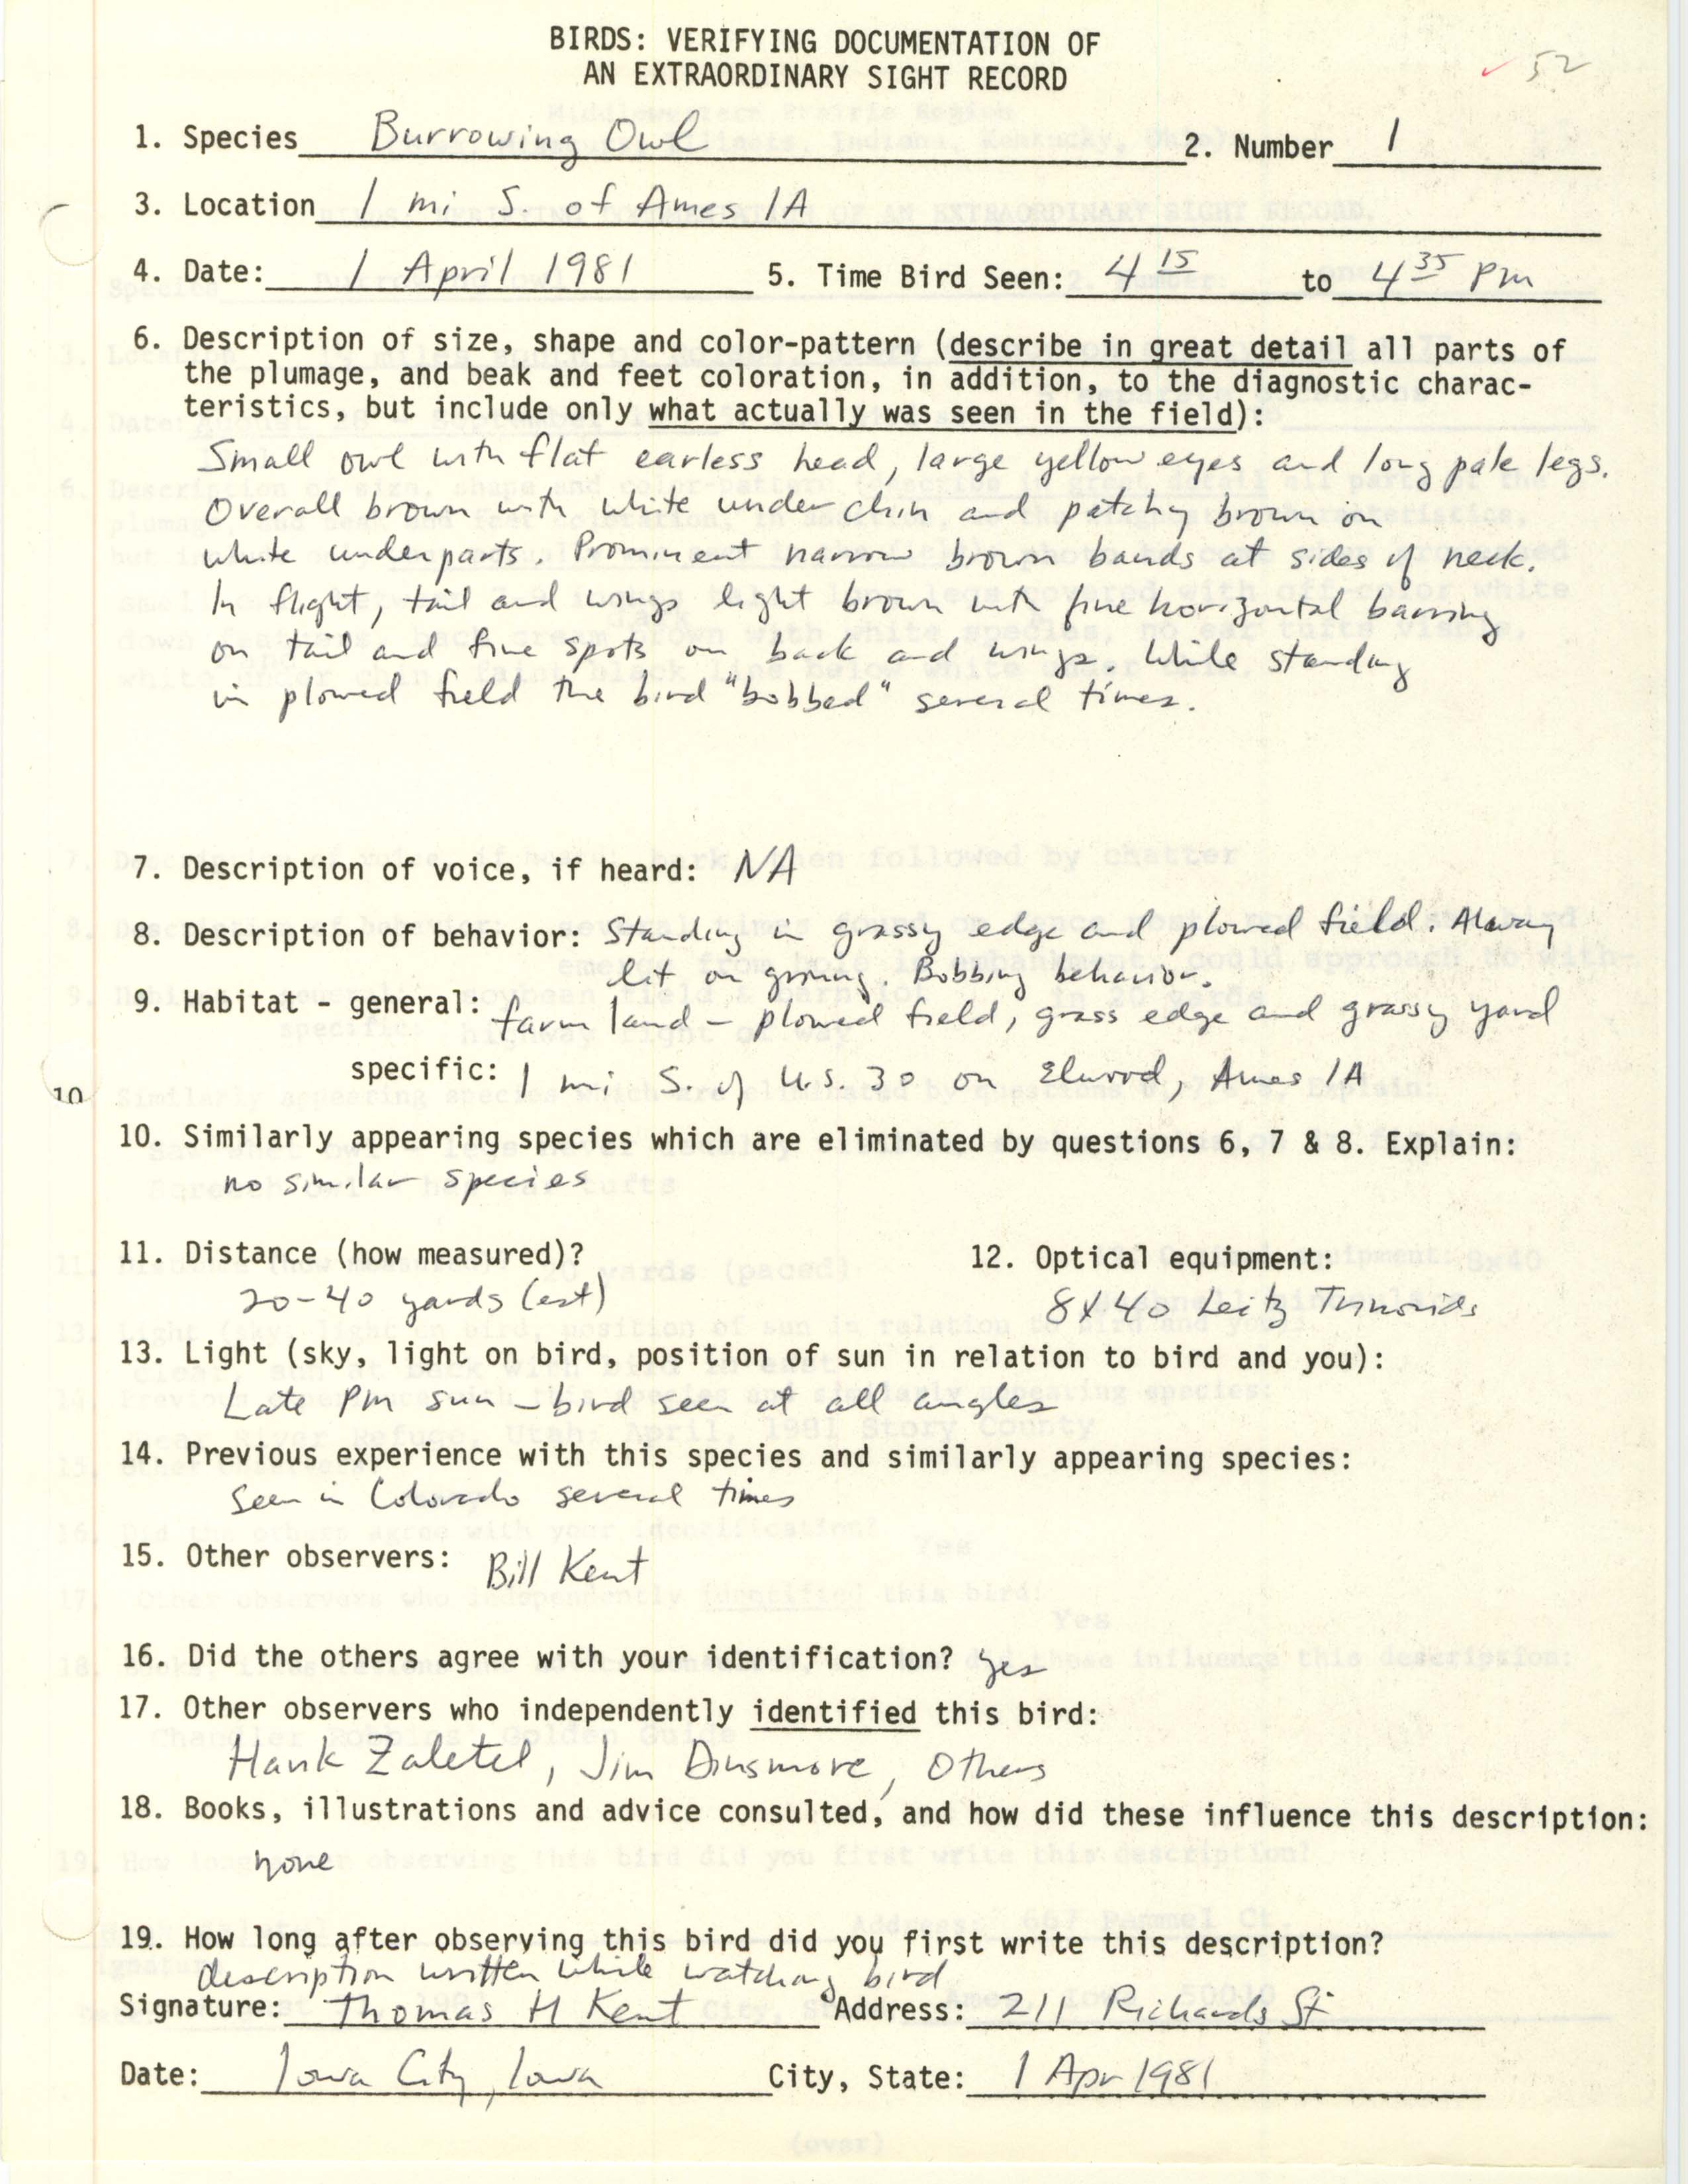 Rare bird documentation form for Burrowing Owl south of Ames, 1981